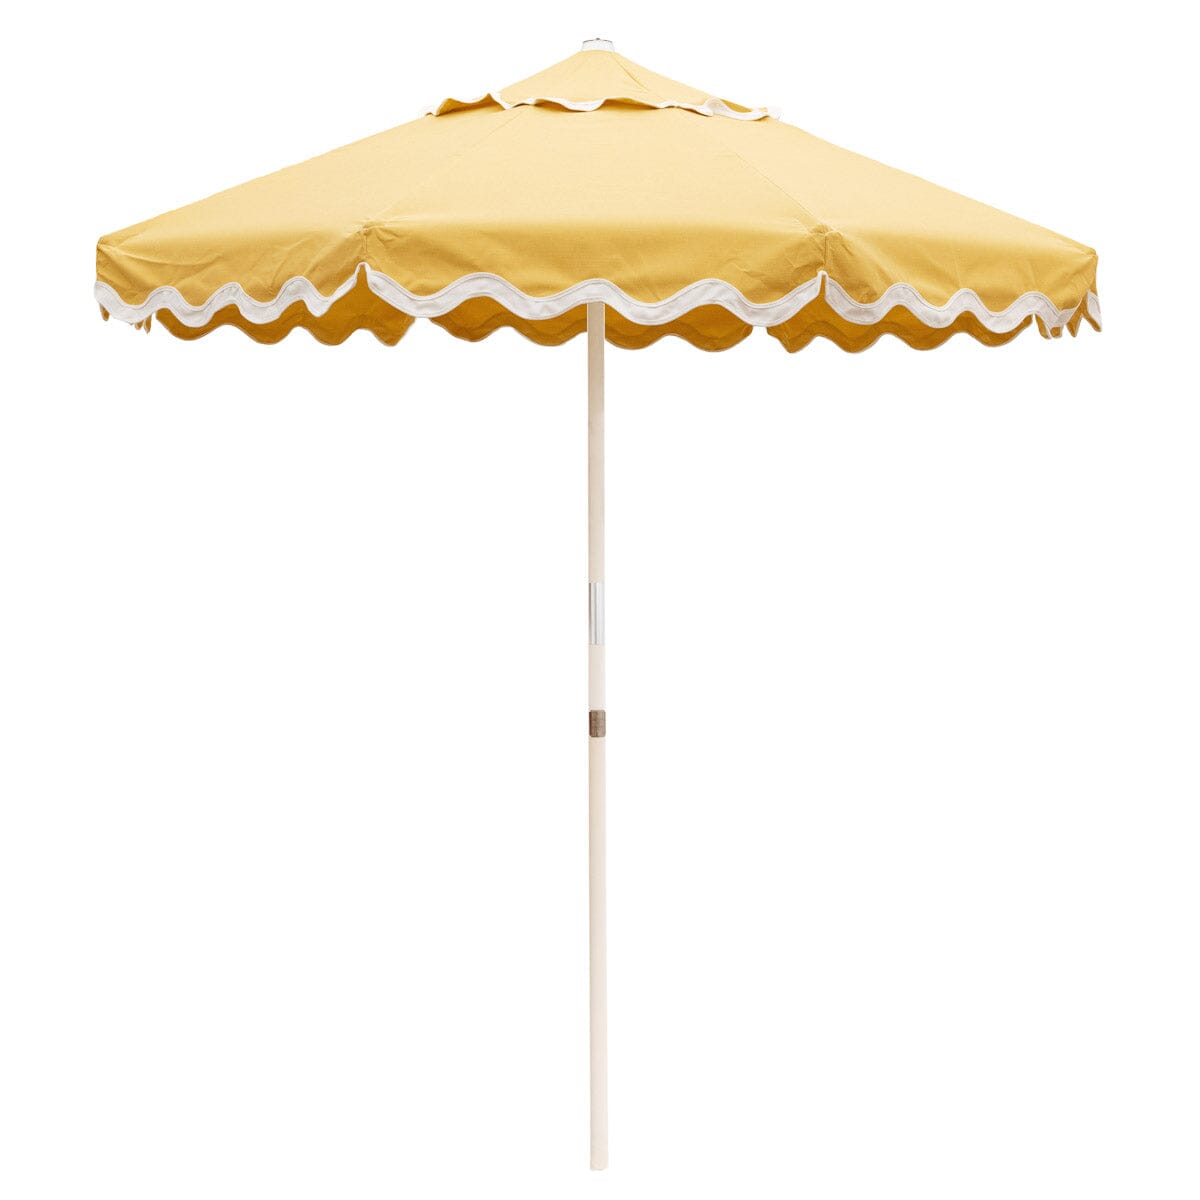 The Market Umbrella - Rivie Mimosa Market Umbrella Business & Pleasure Co 